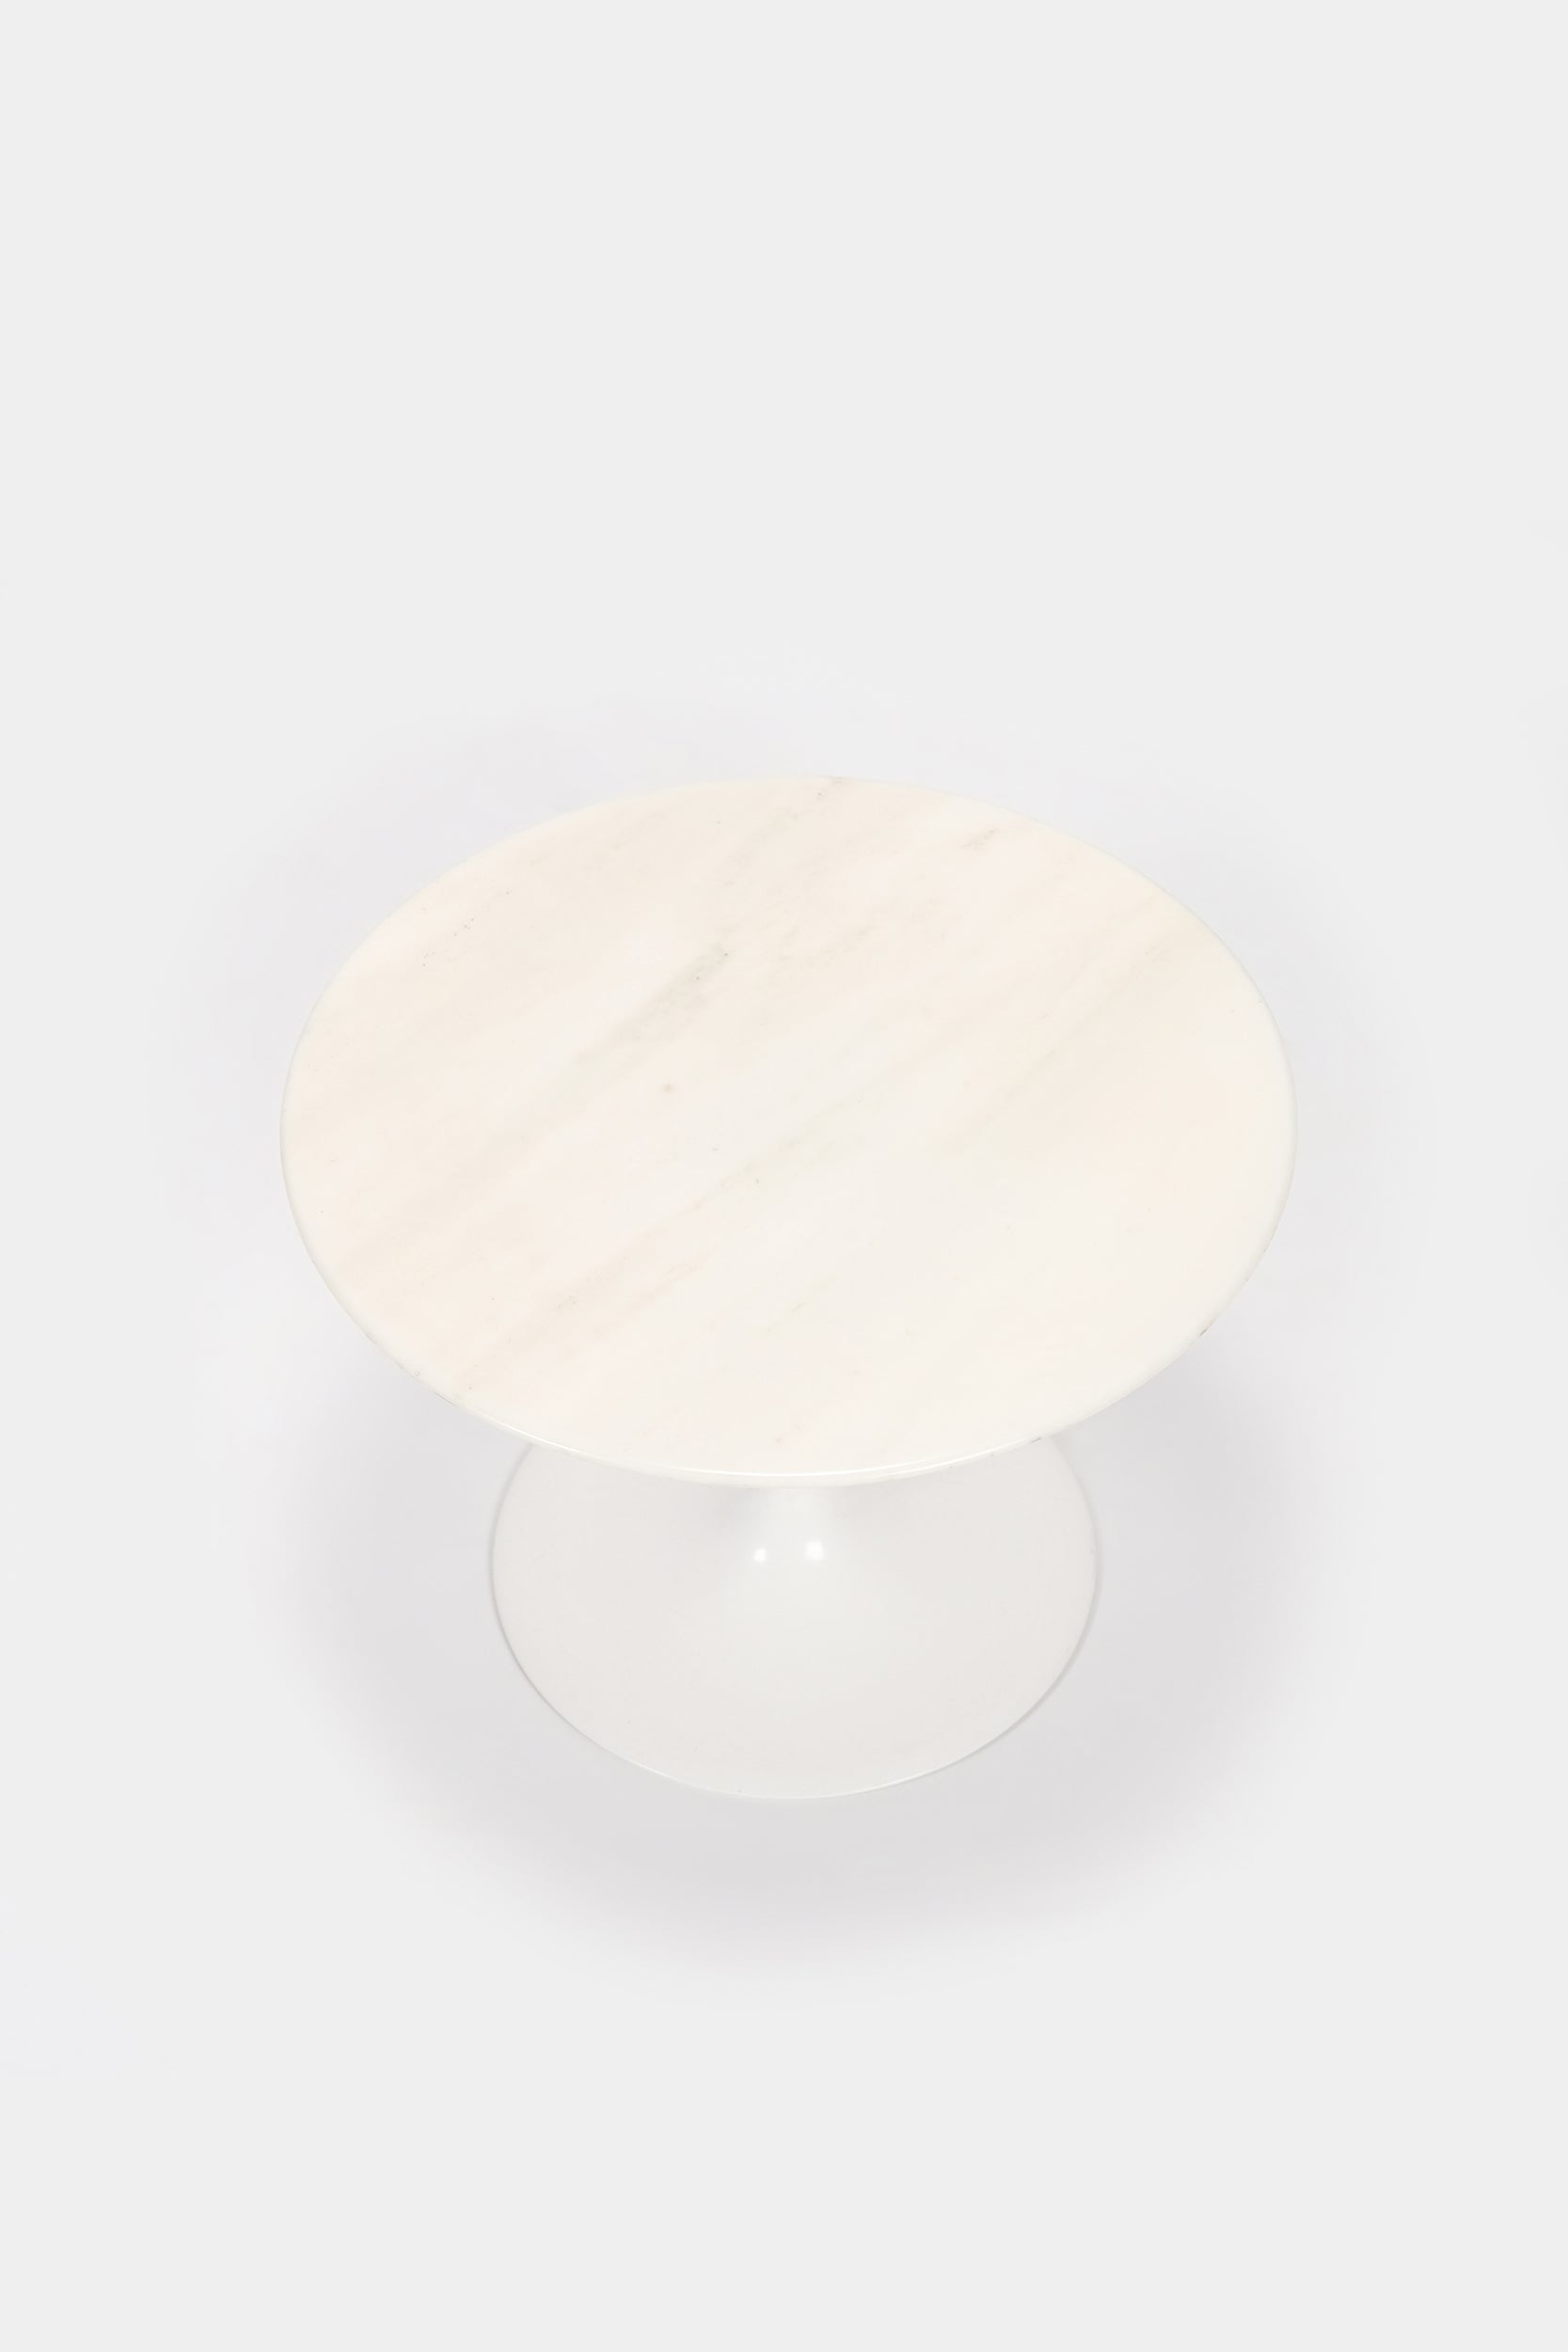 Eero Saarinen Side table, Marble, Knoll International, 70s